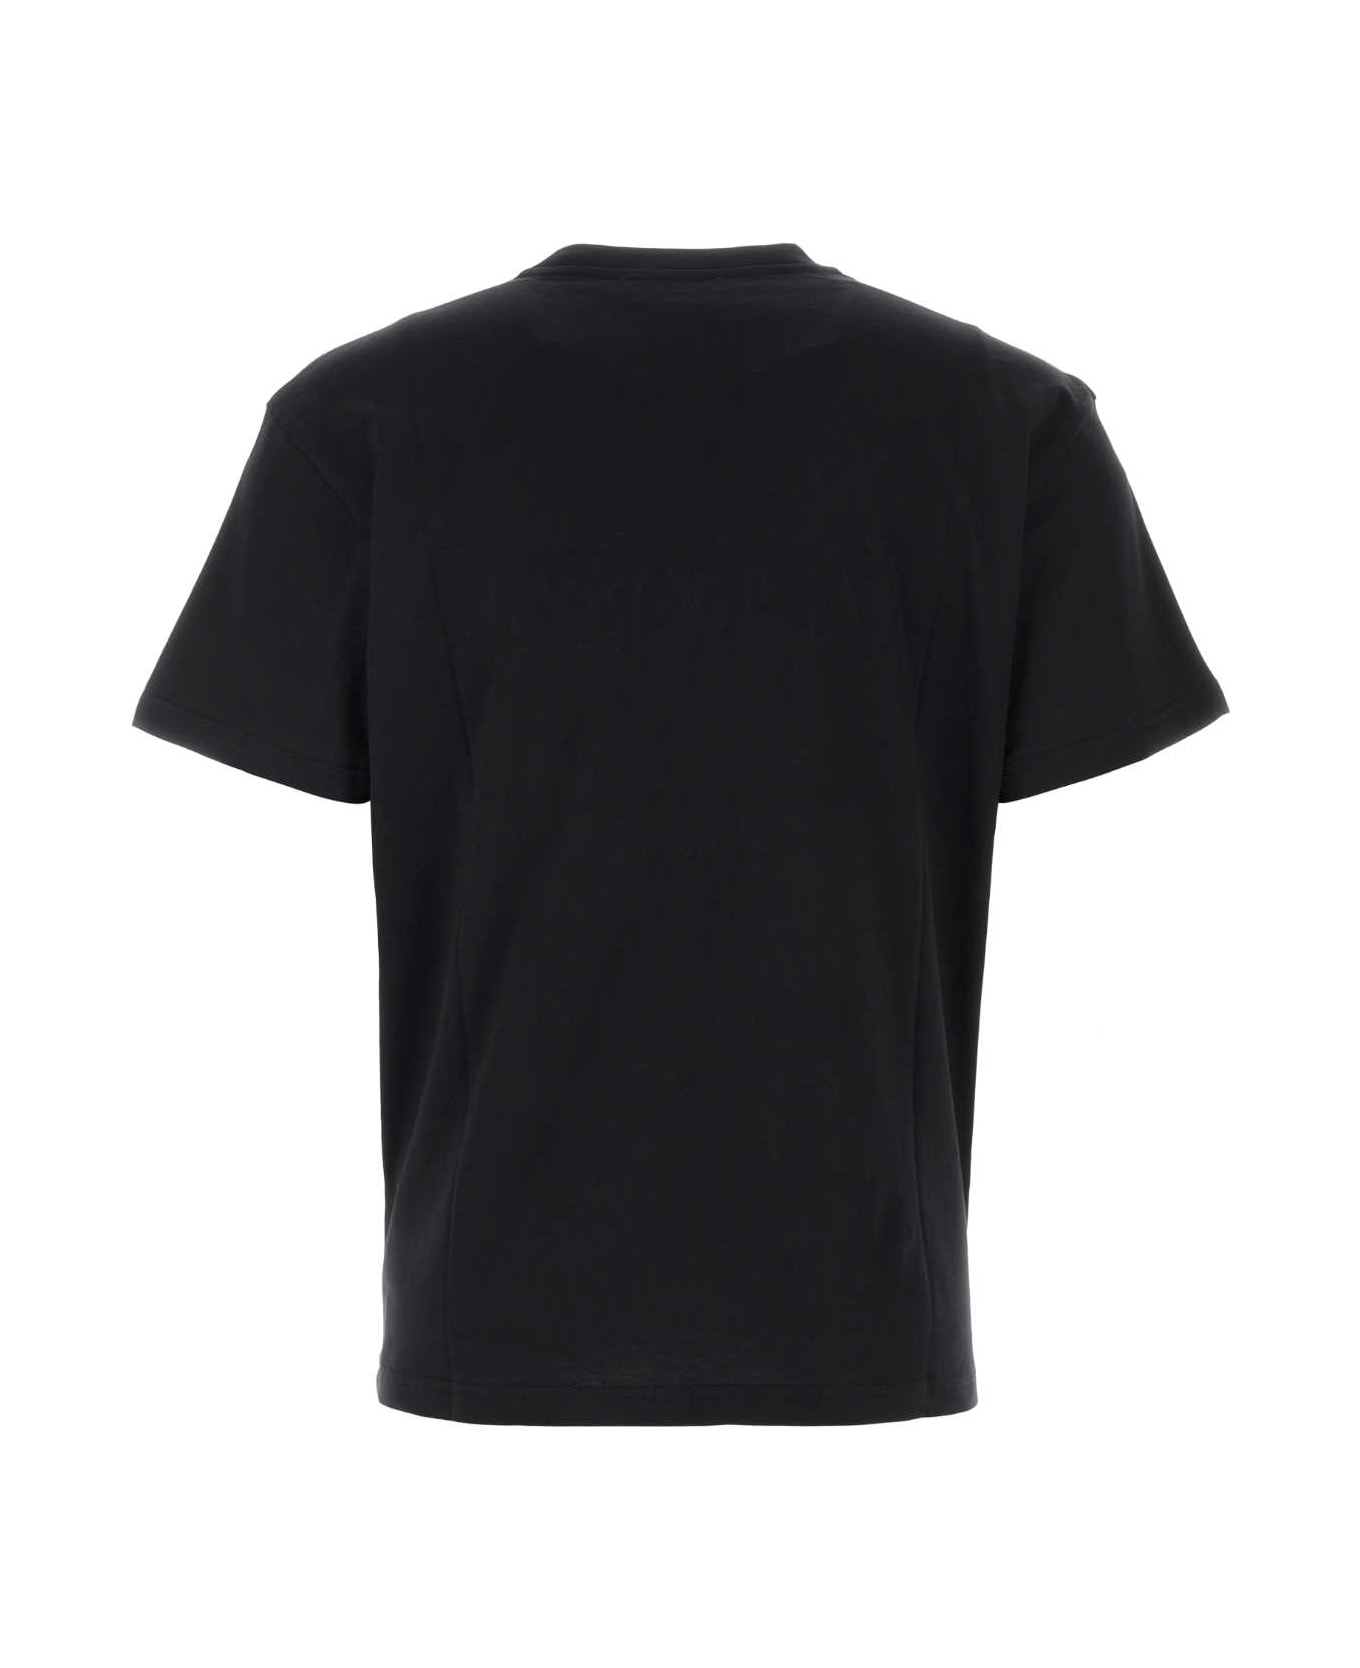 J.W. Anderson Black Cotton T-shirt - Black